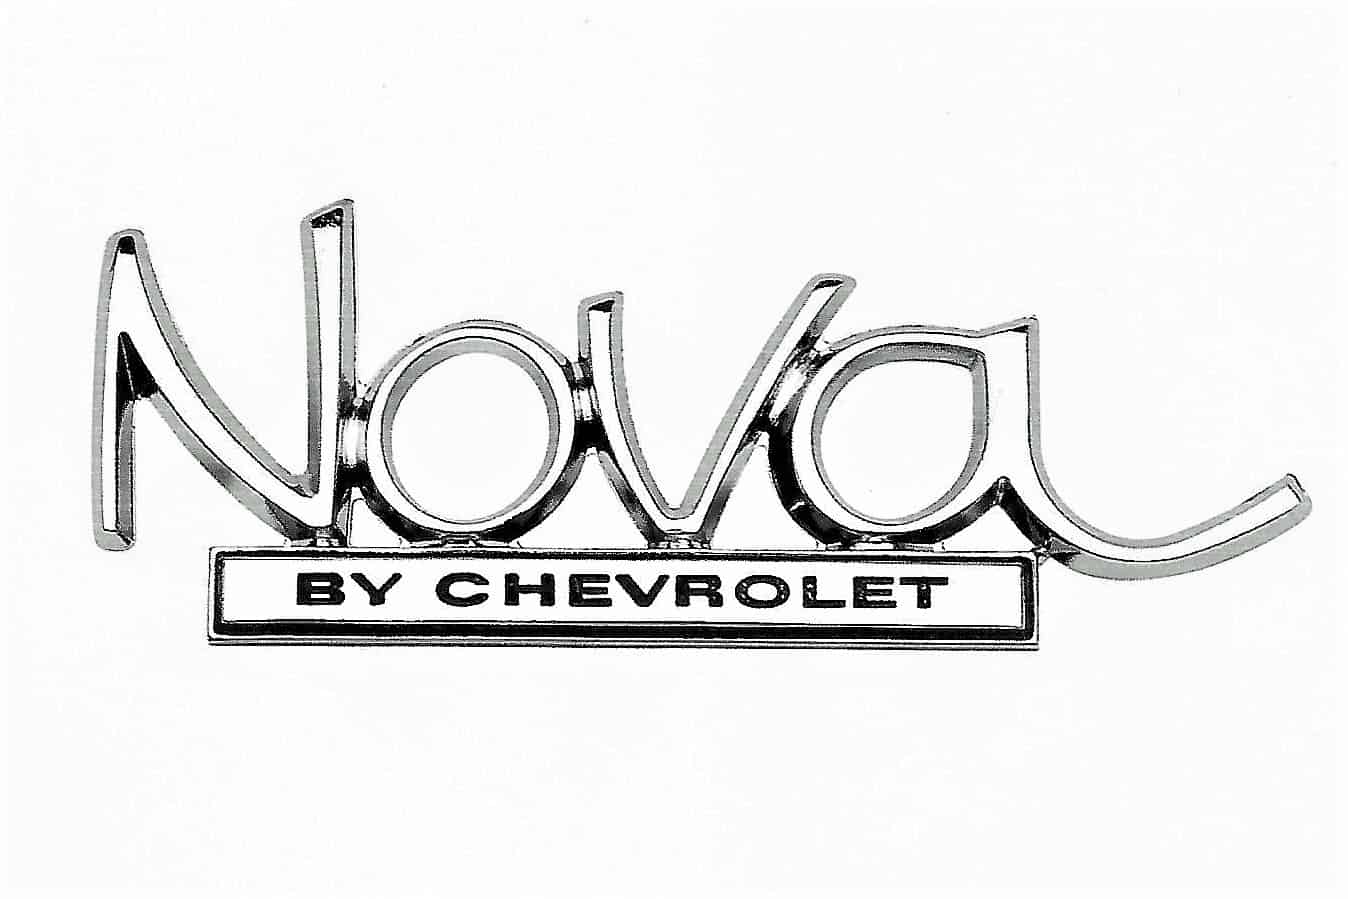 The Nova emblem is correct for 1968-72 models